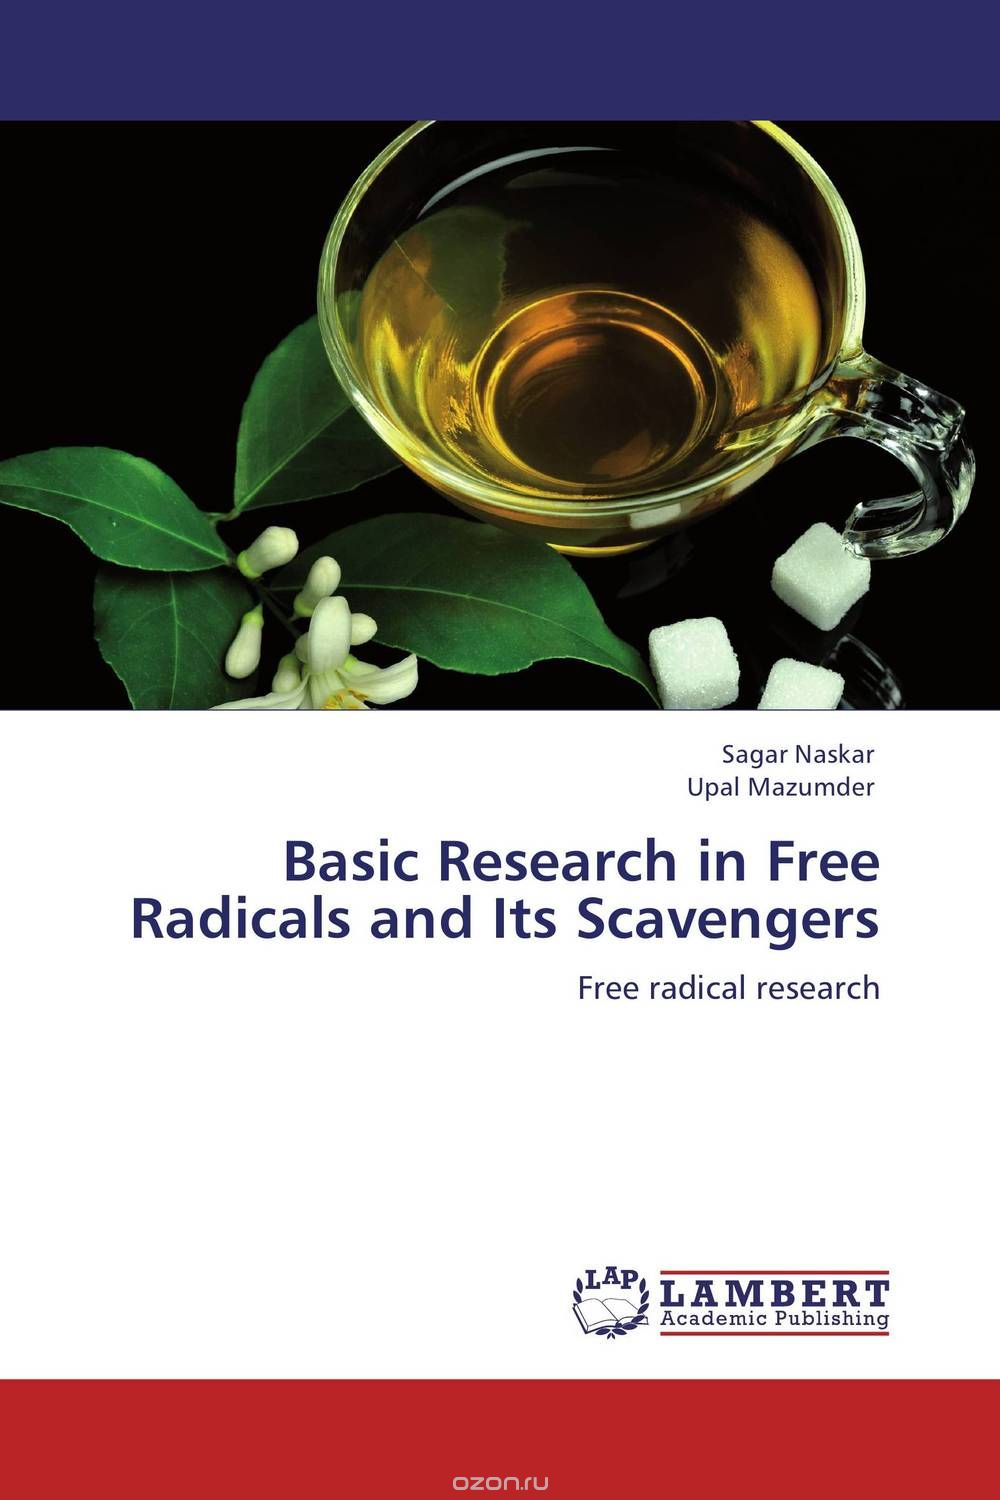 Скачать книгу "Basic Research in Free Radicals and Its Scavengers"